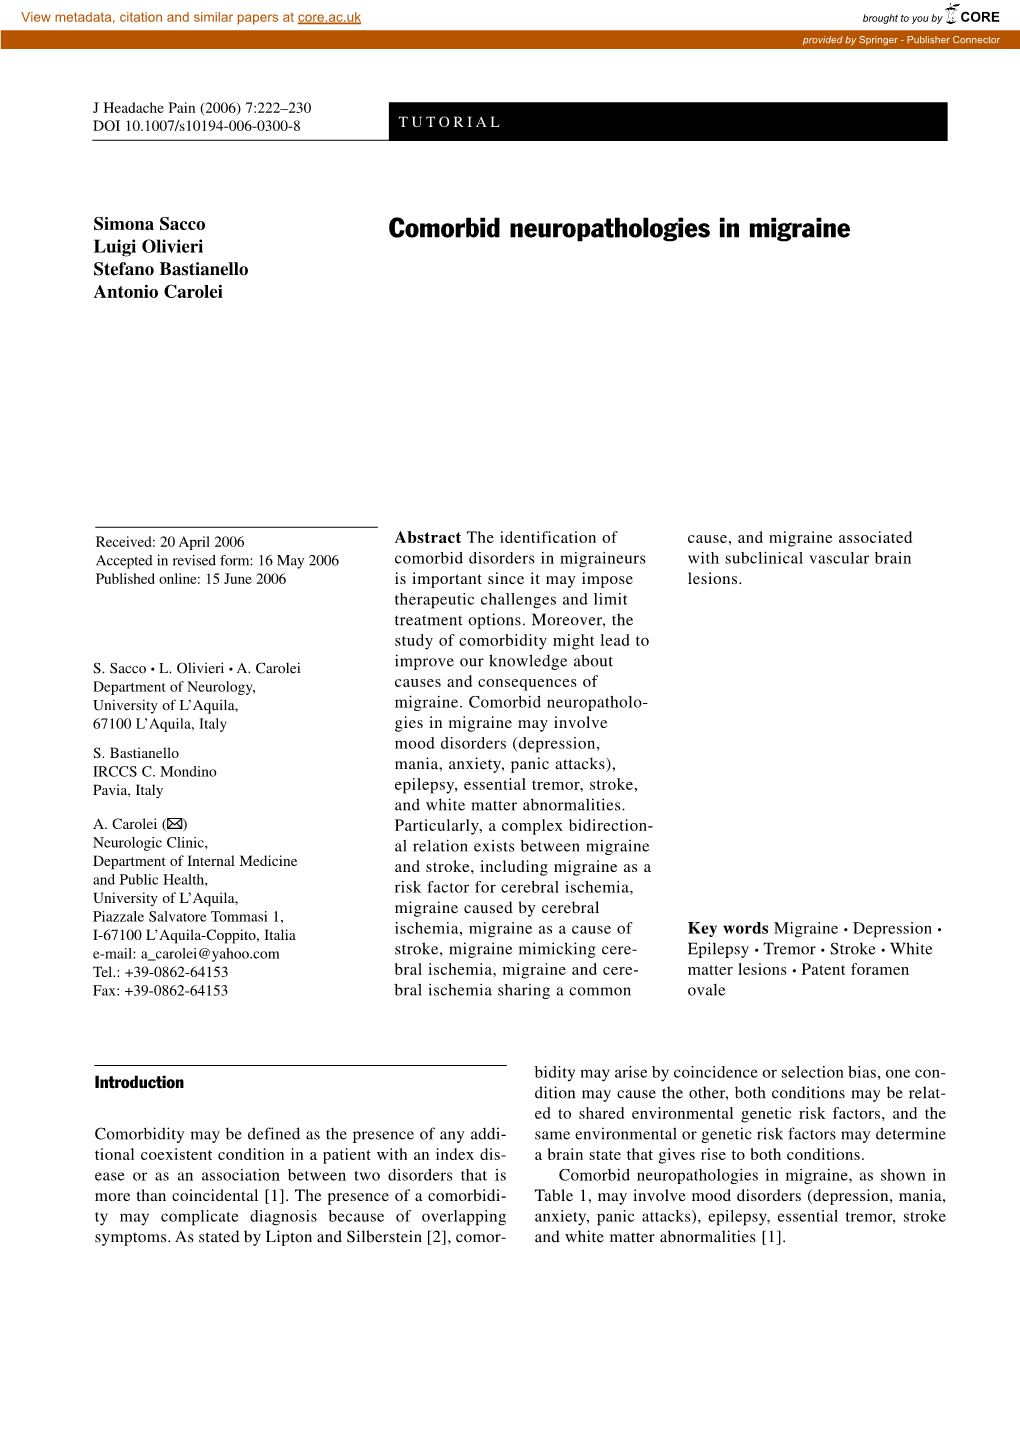 Comorbid Neuropathologies in Migraine Luigi Olivieri Stefano Bastianello Antonio Carolei